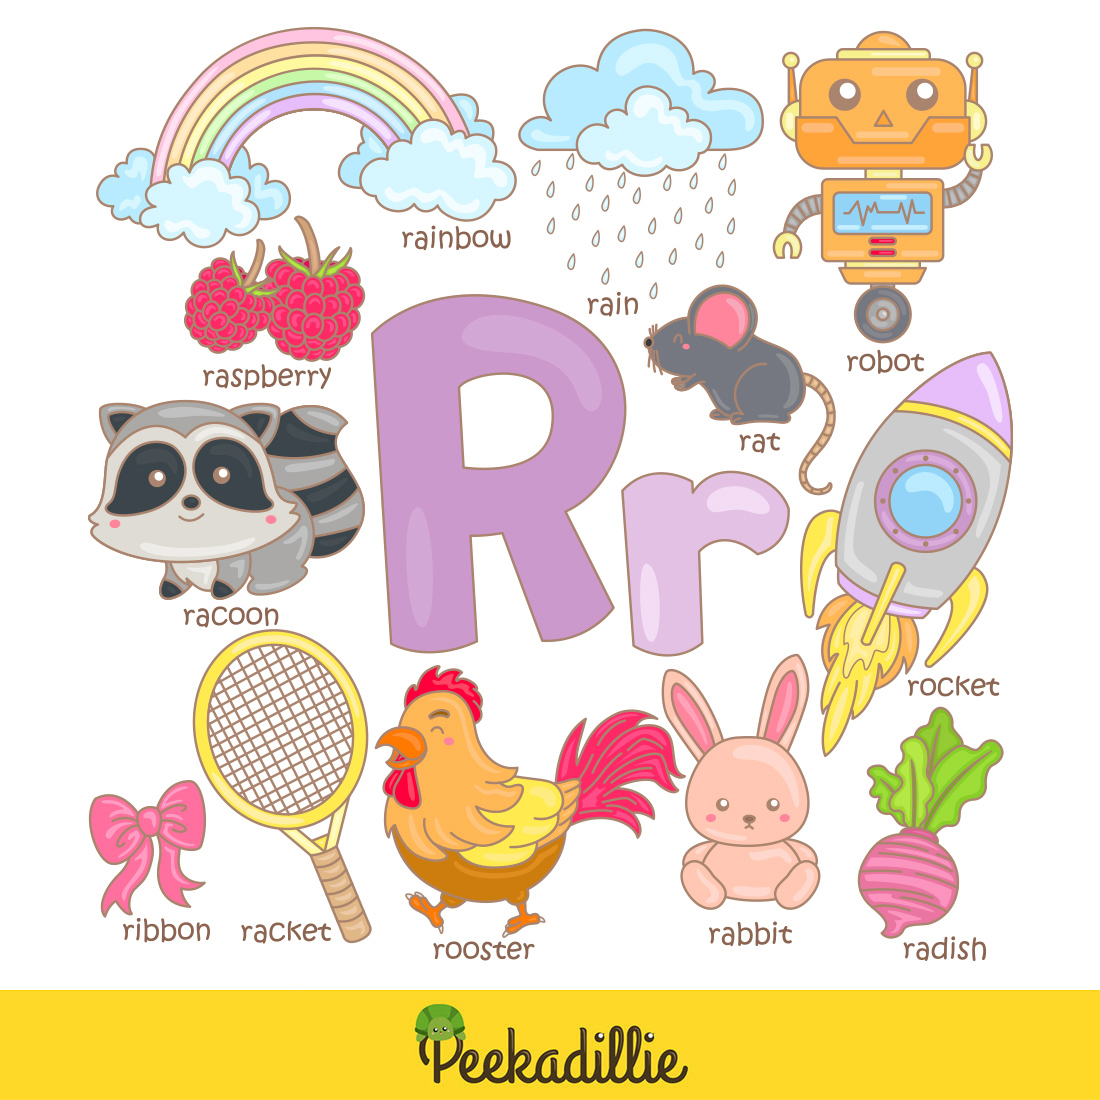 Alphabet R For Vocabulary School Lesson Rocket Robot Rat Rabbit Radish Ribbon Racoon Racket Rainbow Raspberry Rain Rooster Illustration Vector Clipart Cartoon preview image.